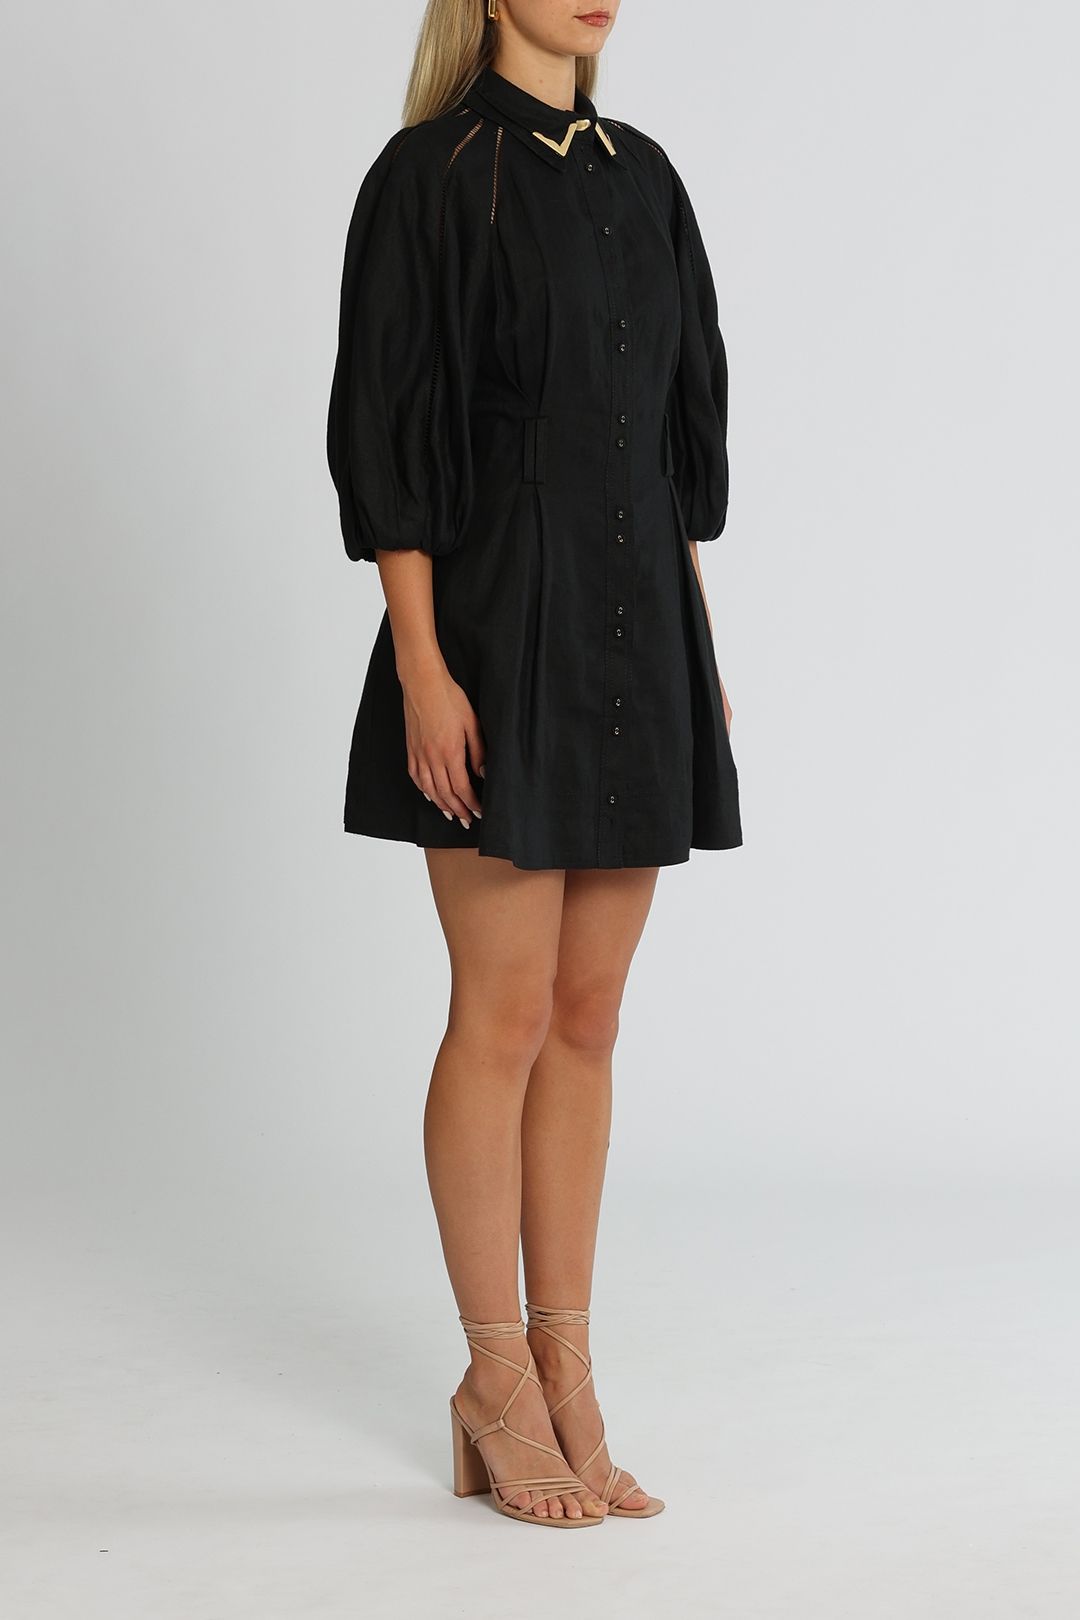 AJE Recurrence Button Up Dress Black Mini